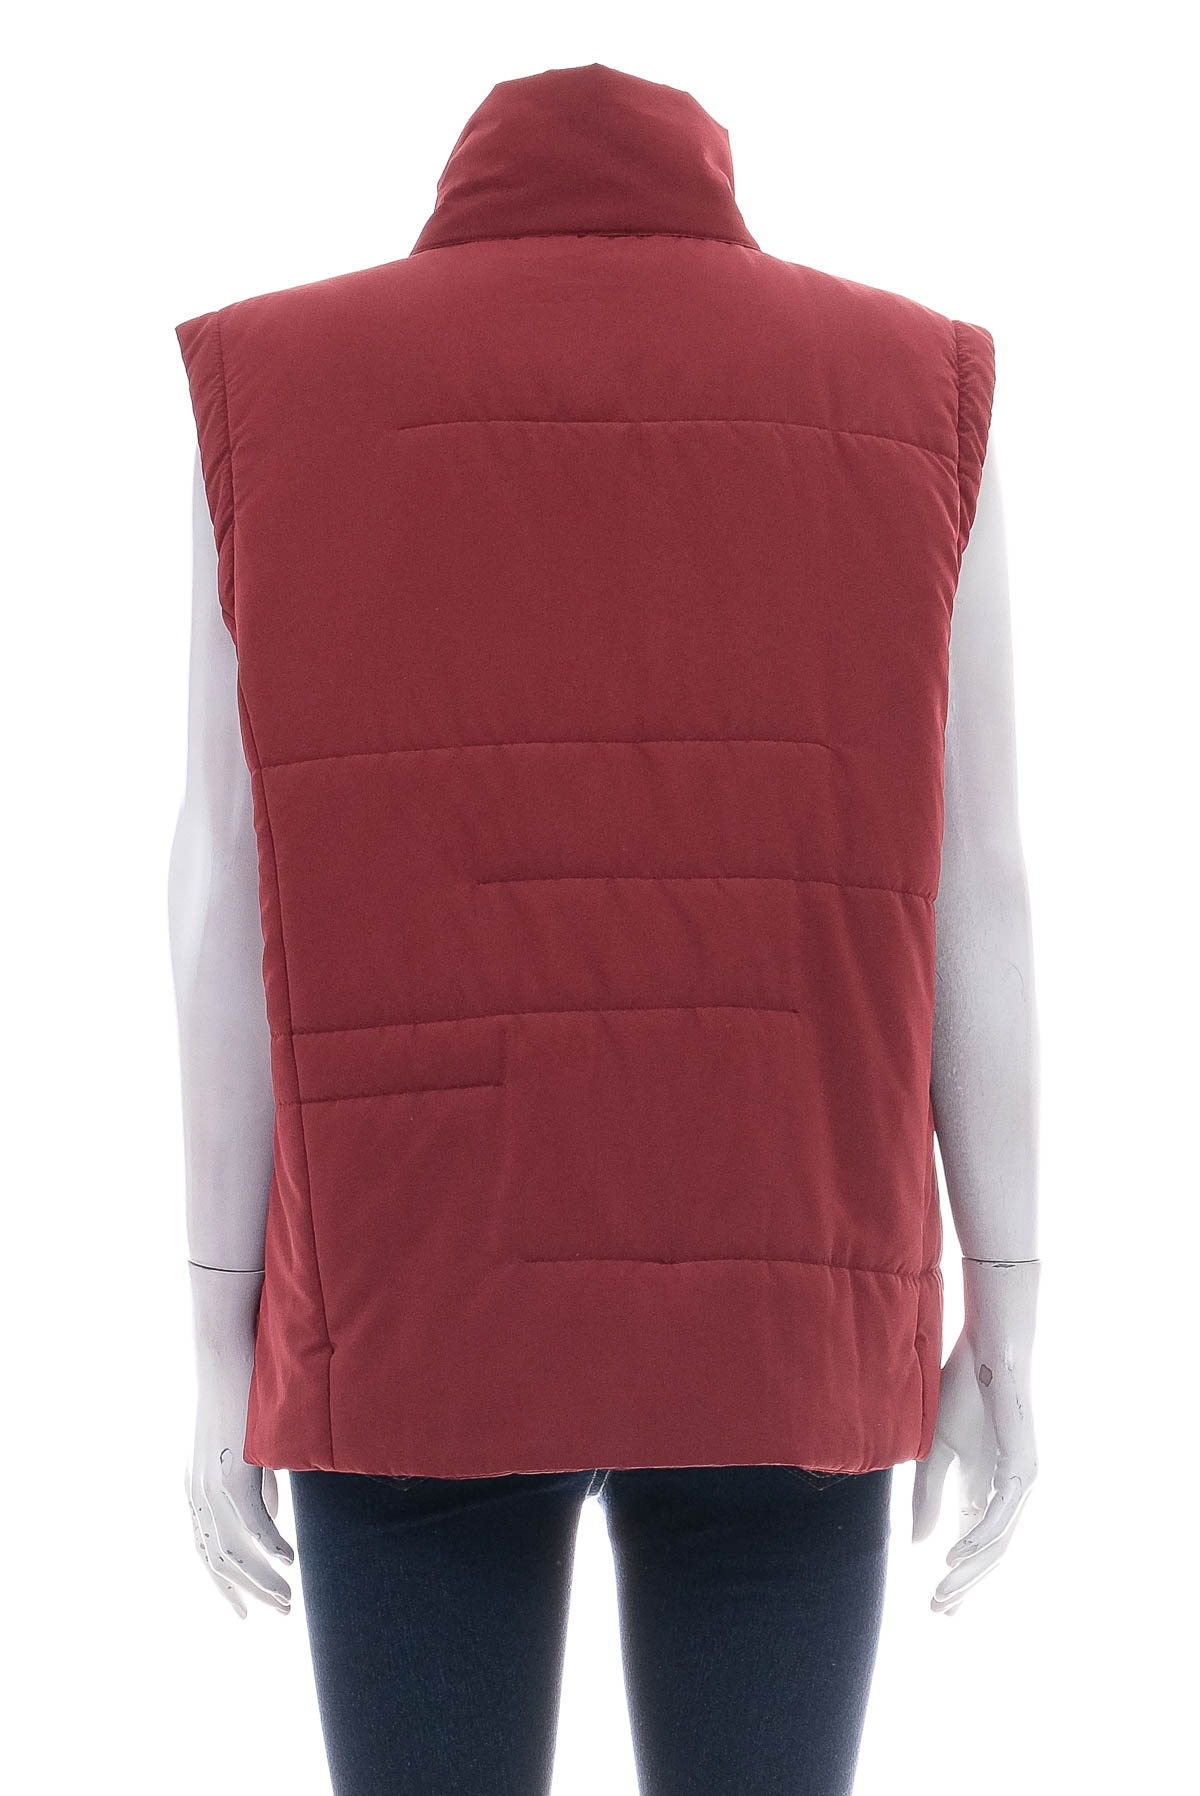 Women's vest - Kitaro - 1